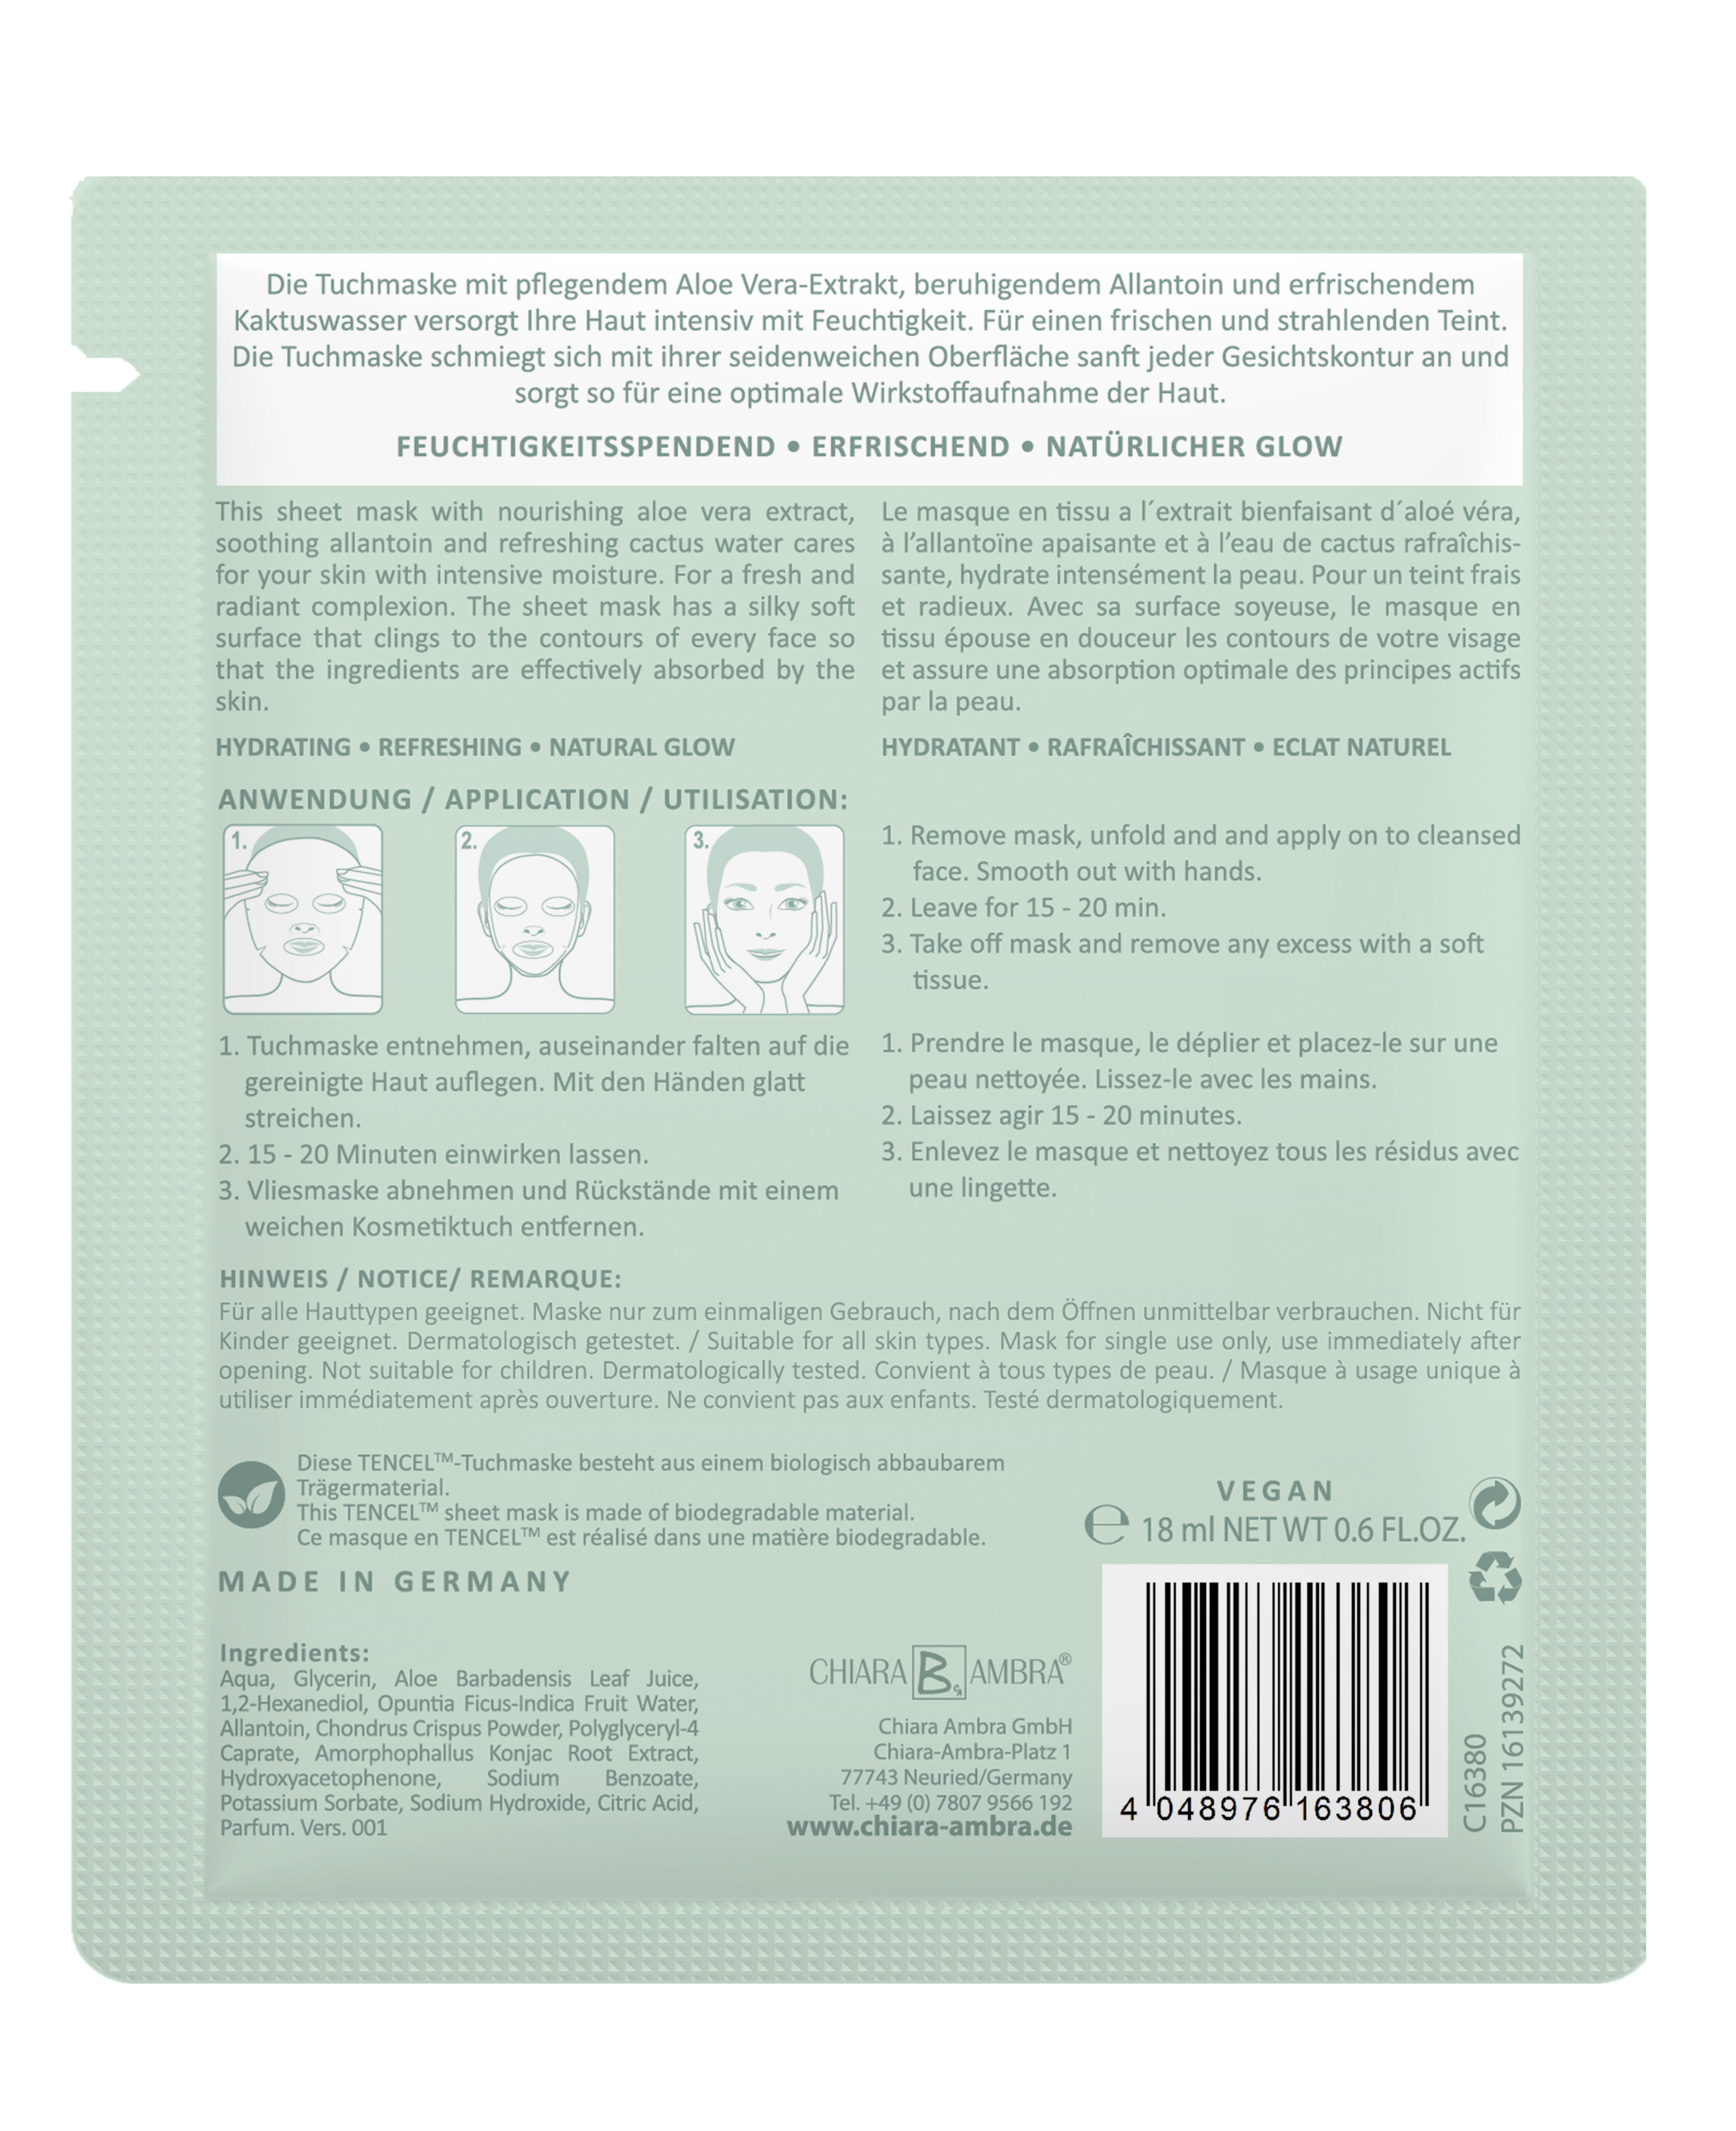 CHIARA AMBRA® Tuchmaske mit Aloe Vera Extrakt